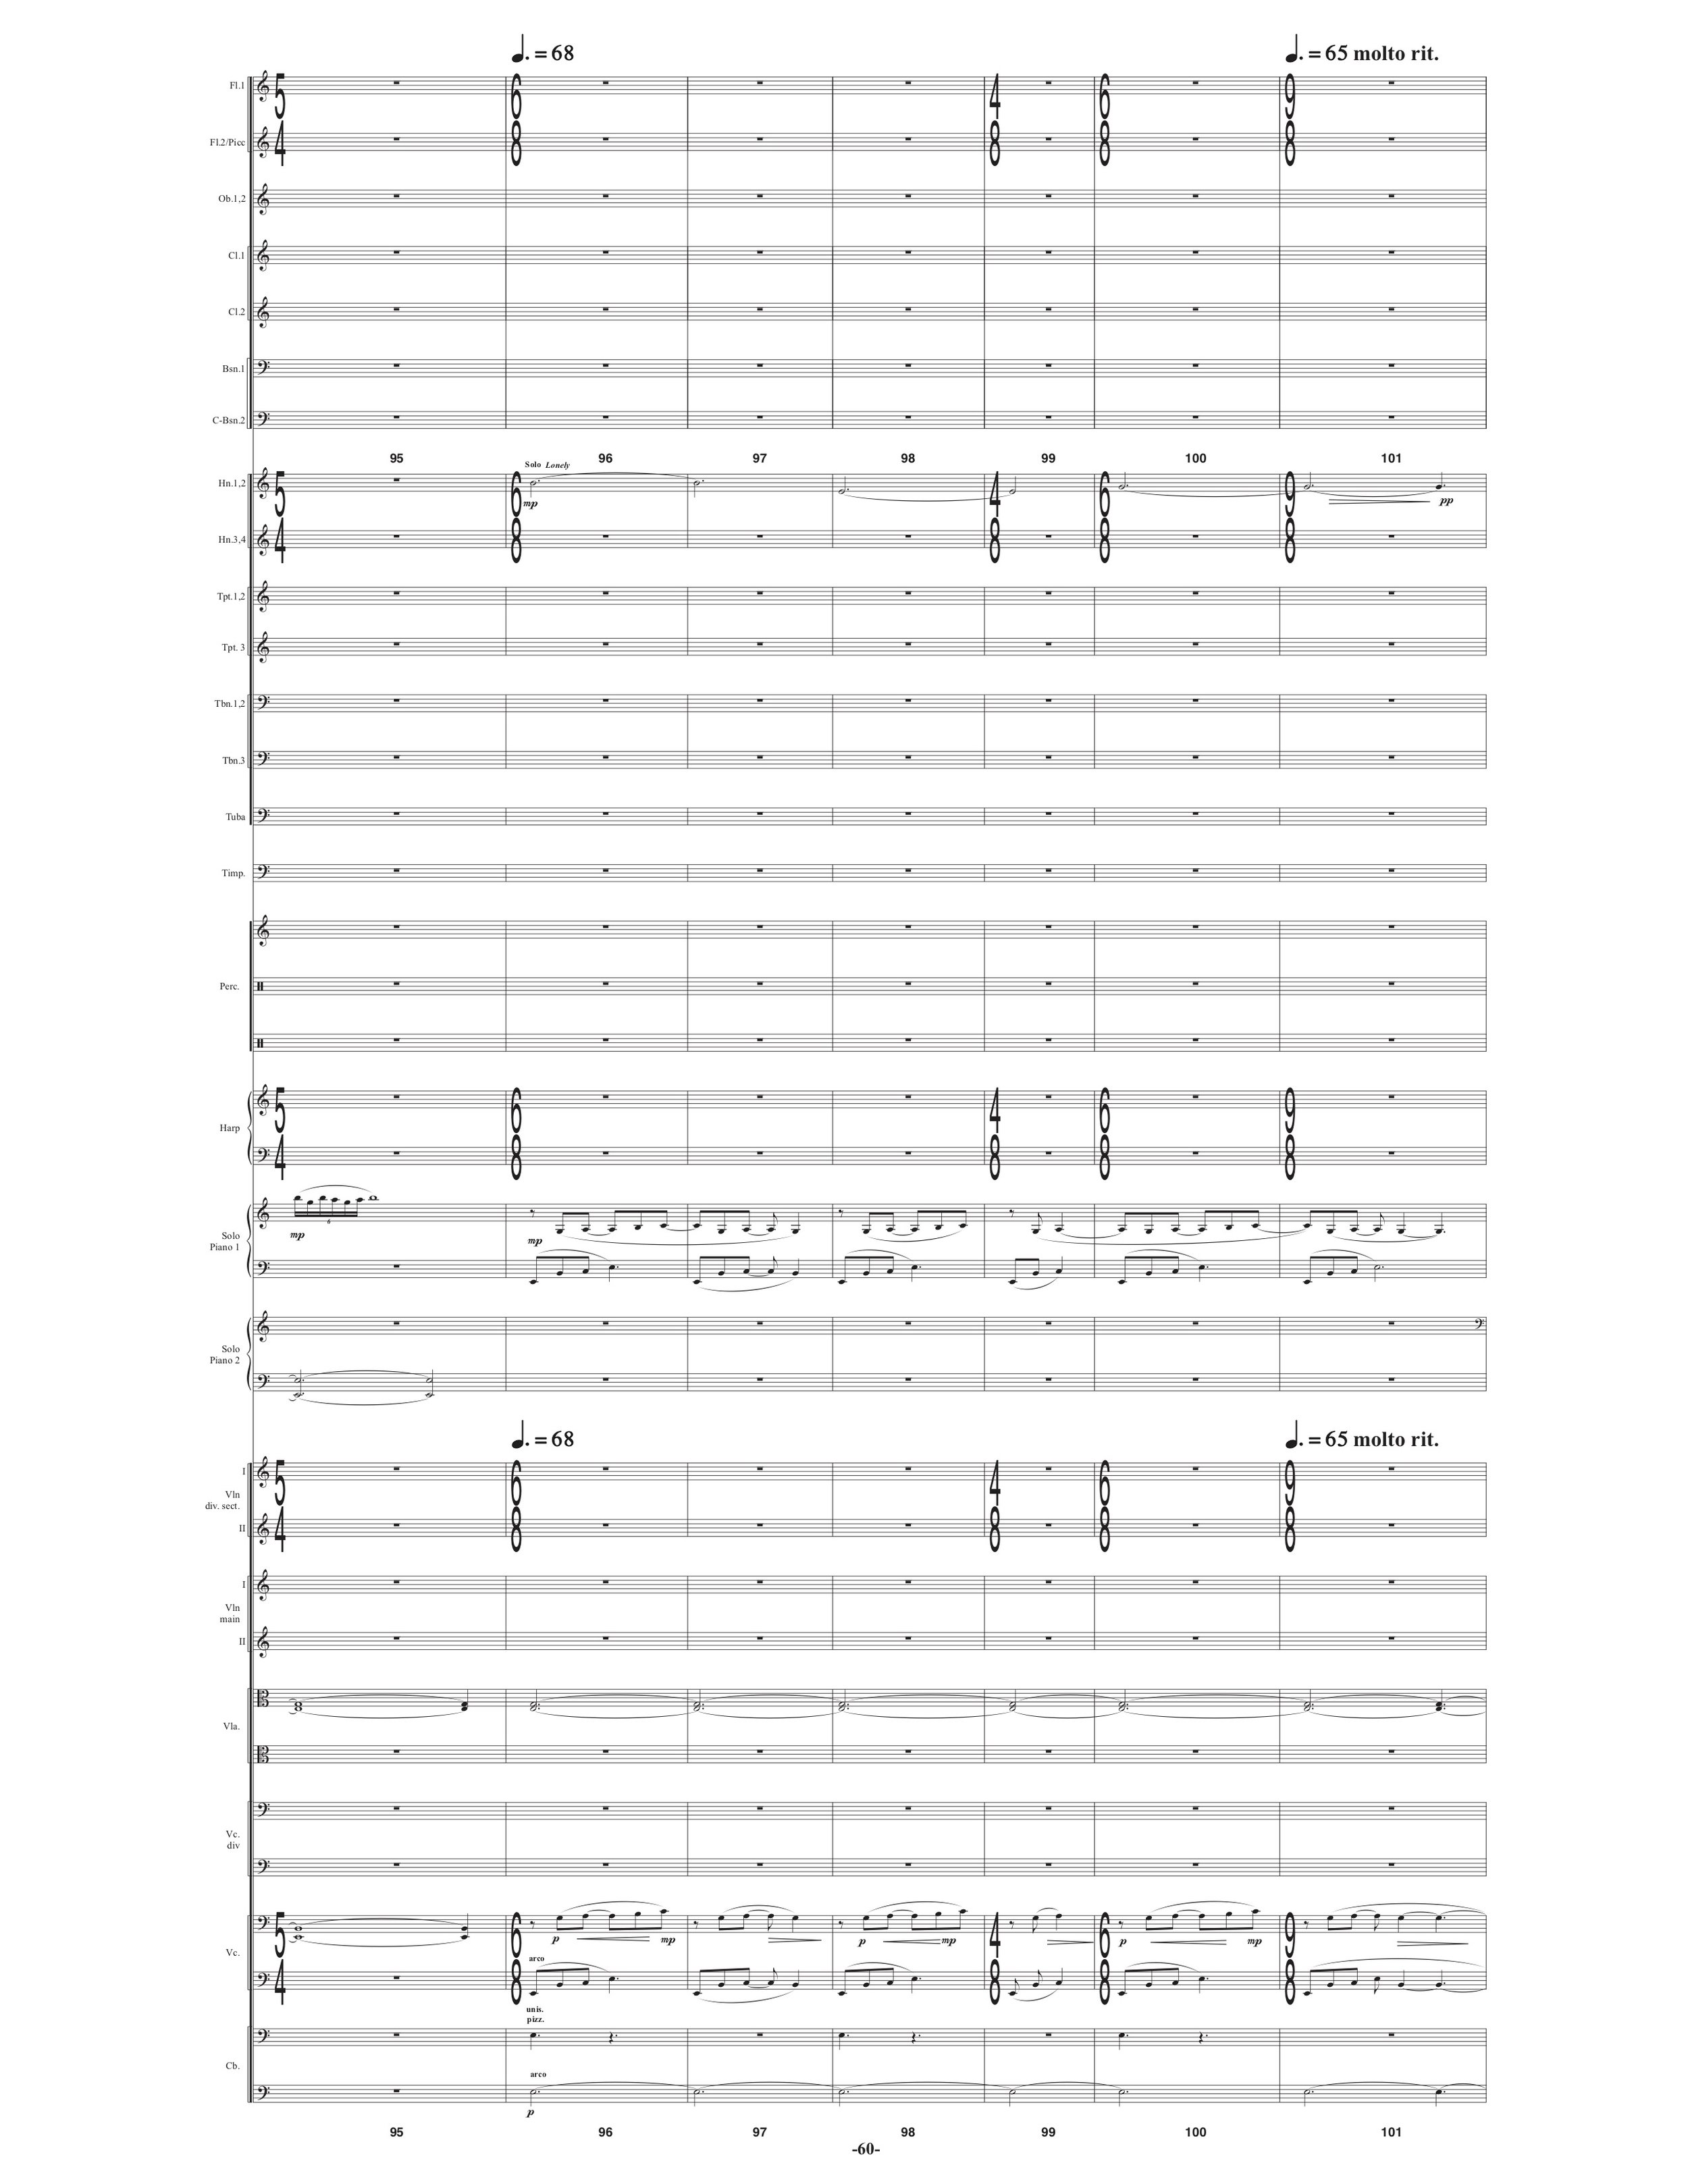 Symphony_Orch & 2 Pianos p65.jpg